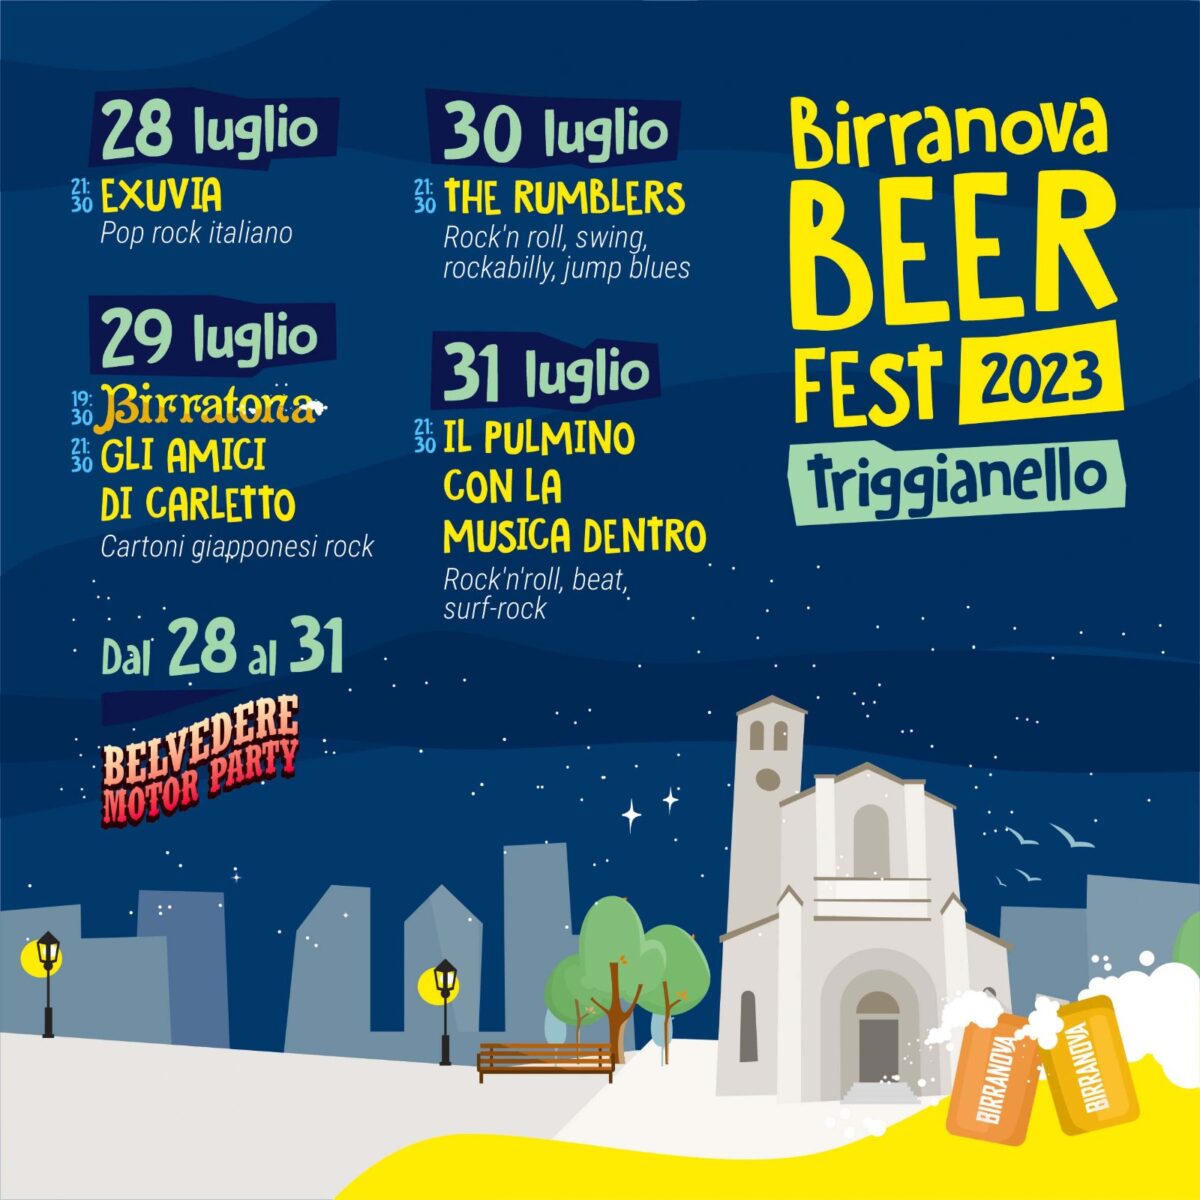 birranova beer fest 2023